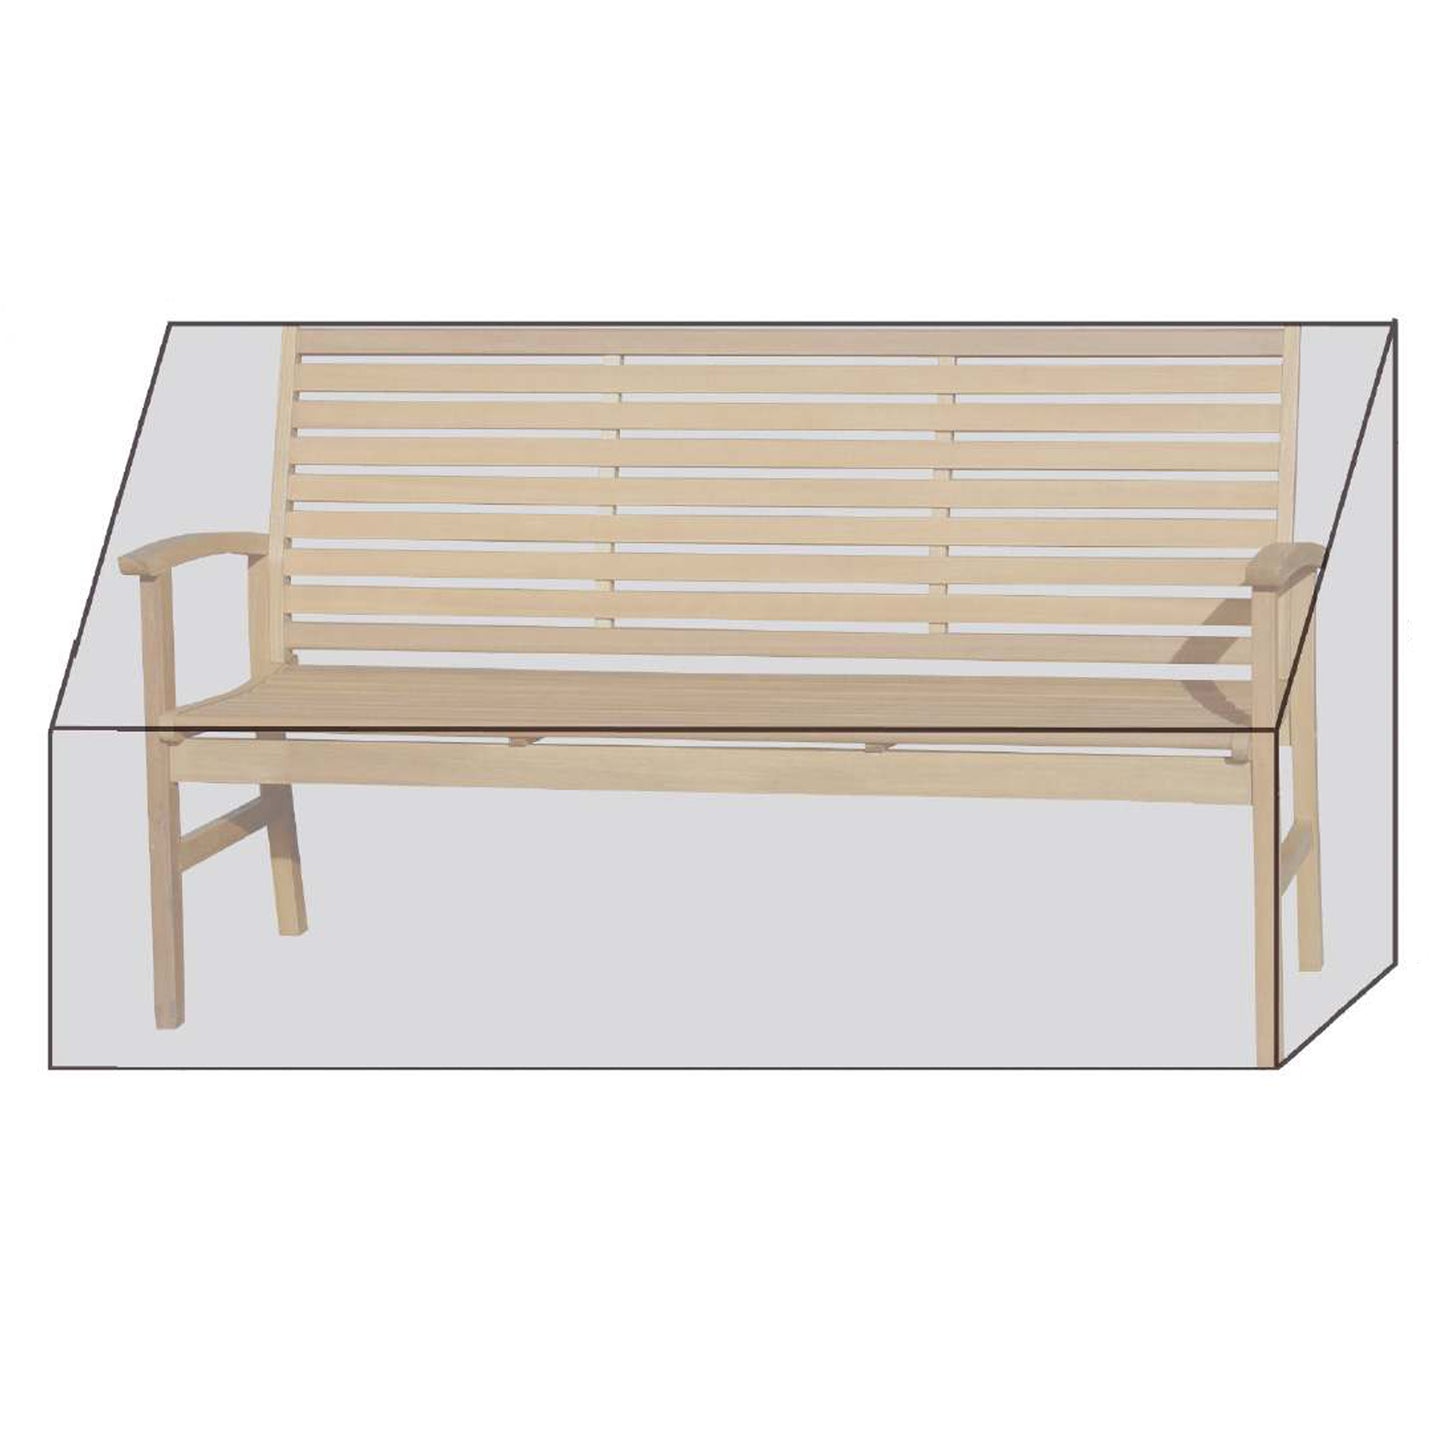 Black Premium Gartenbankhülle  160x60x85cm / garden bench cover /  atmungsaktiv / breathable